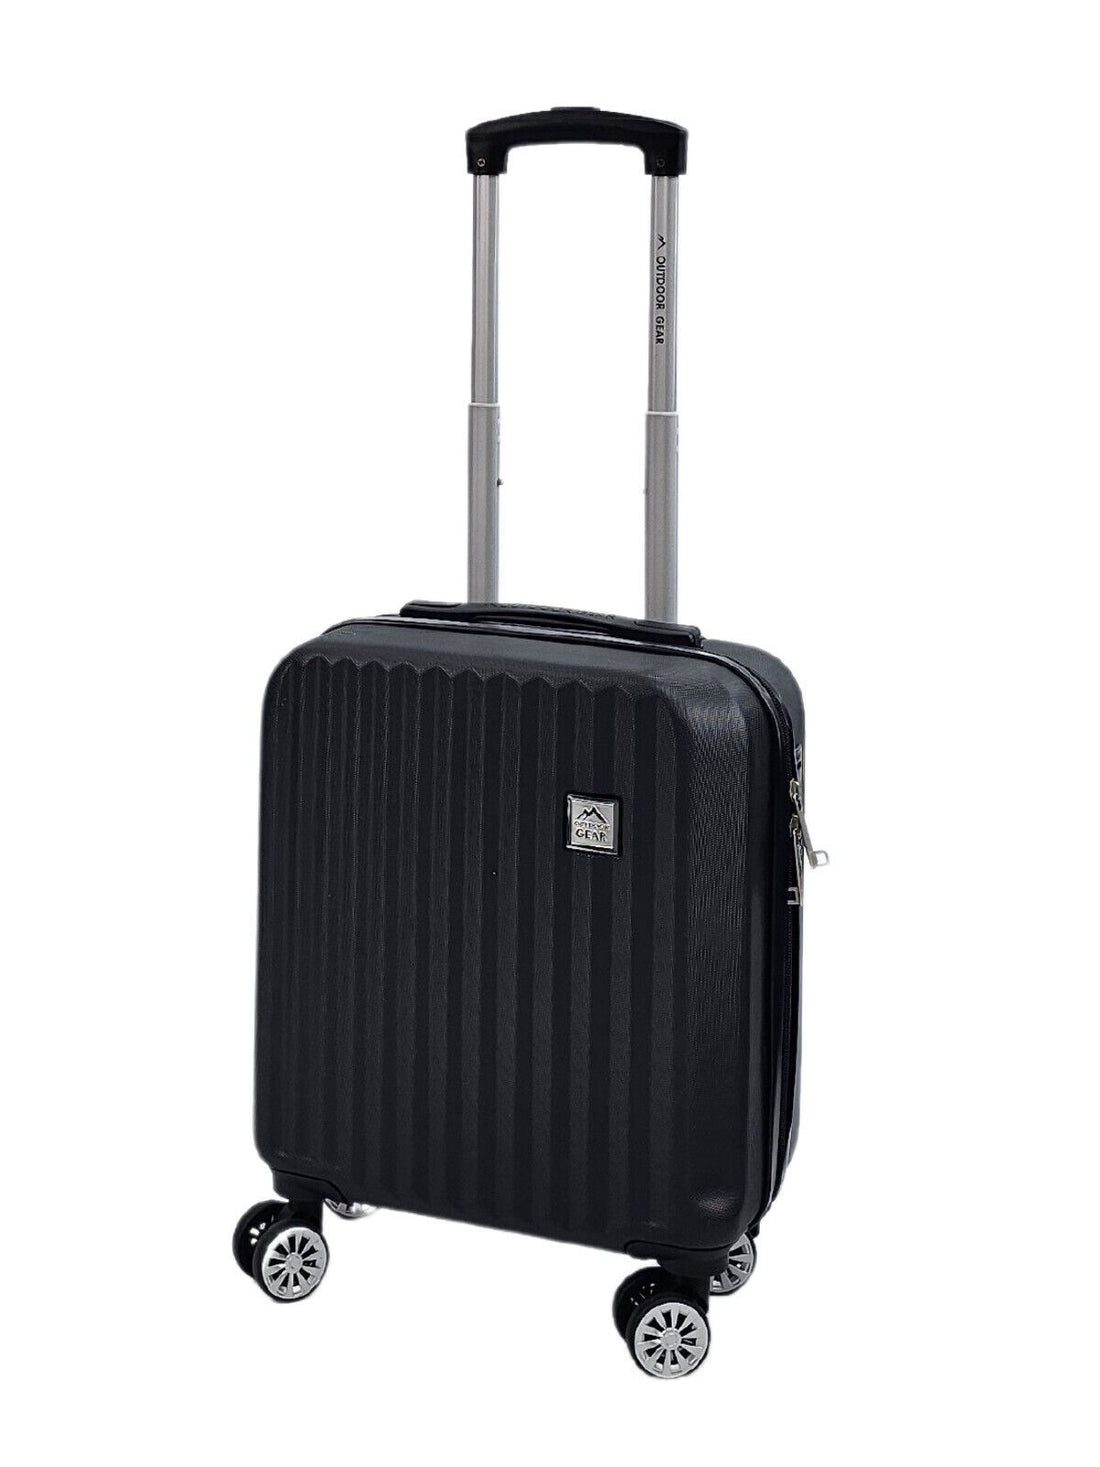 Albertville Underseat Hard Shell Suitcase in Black